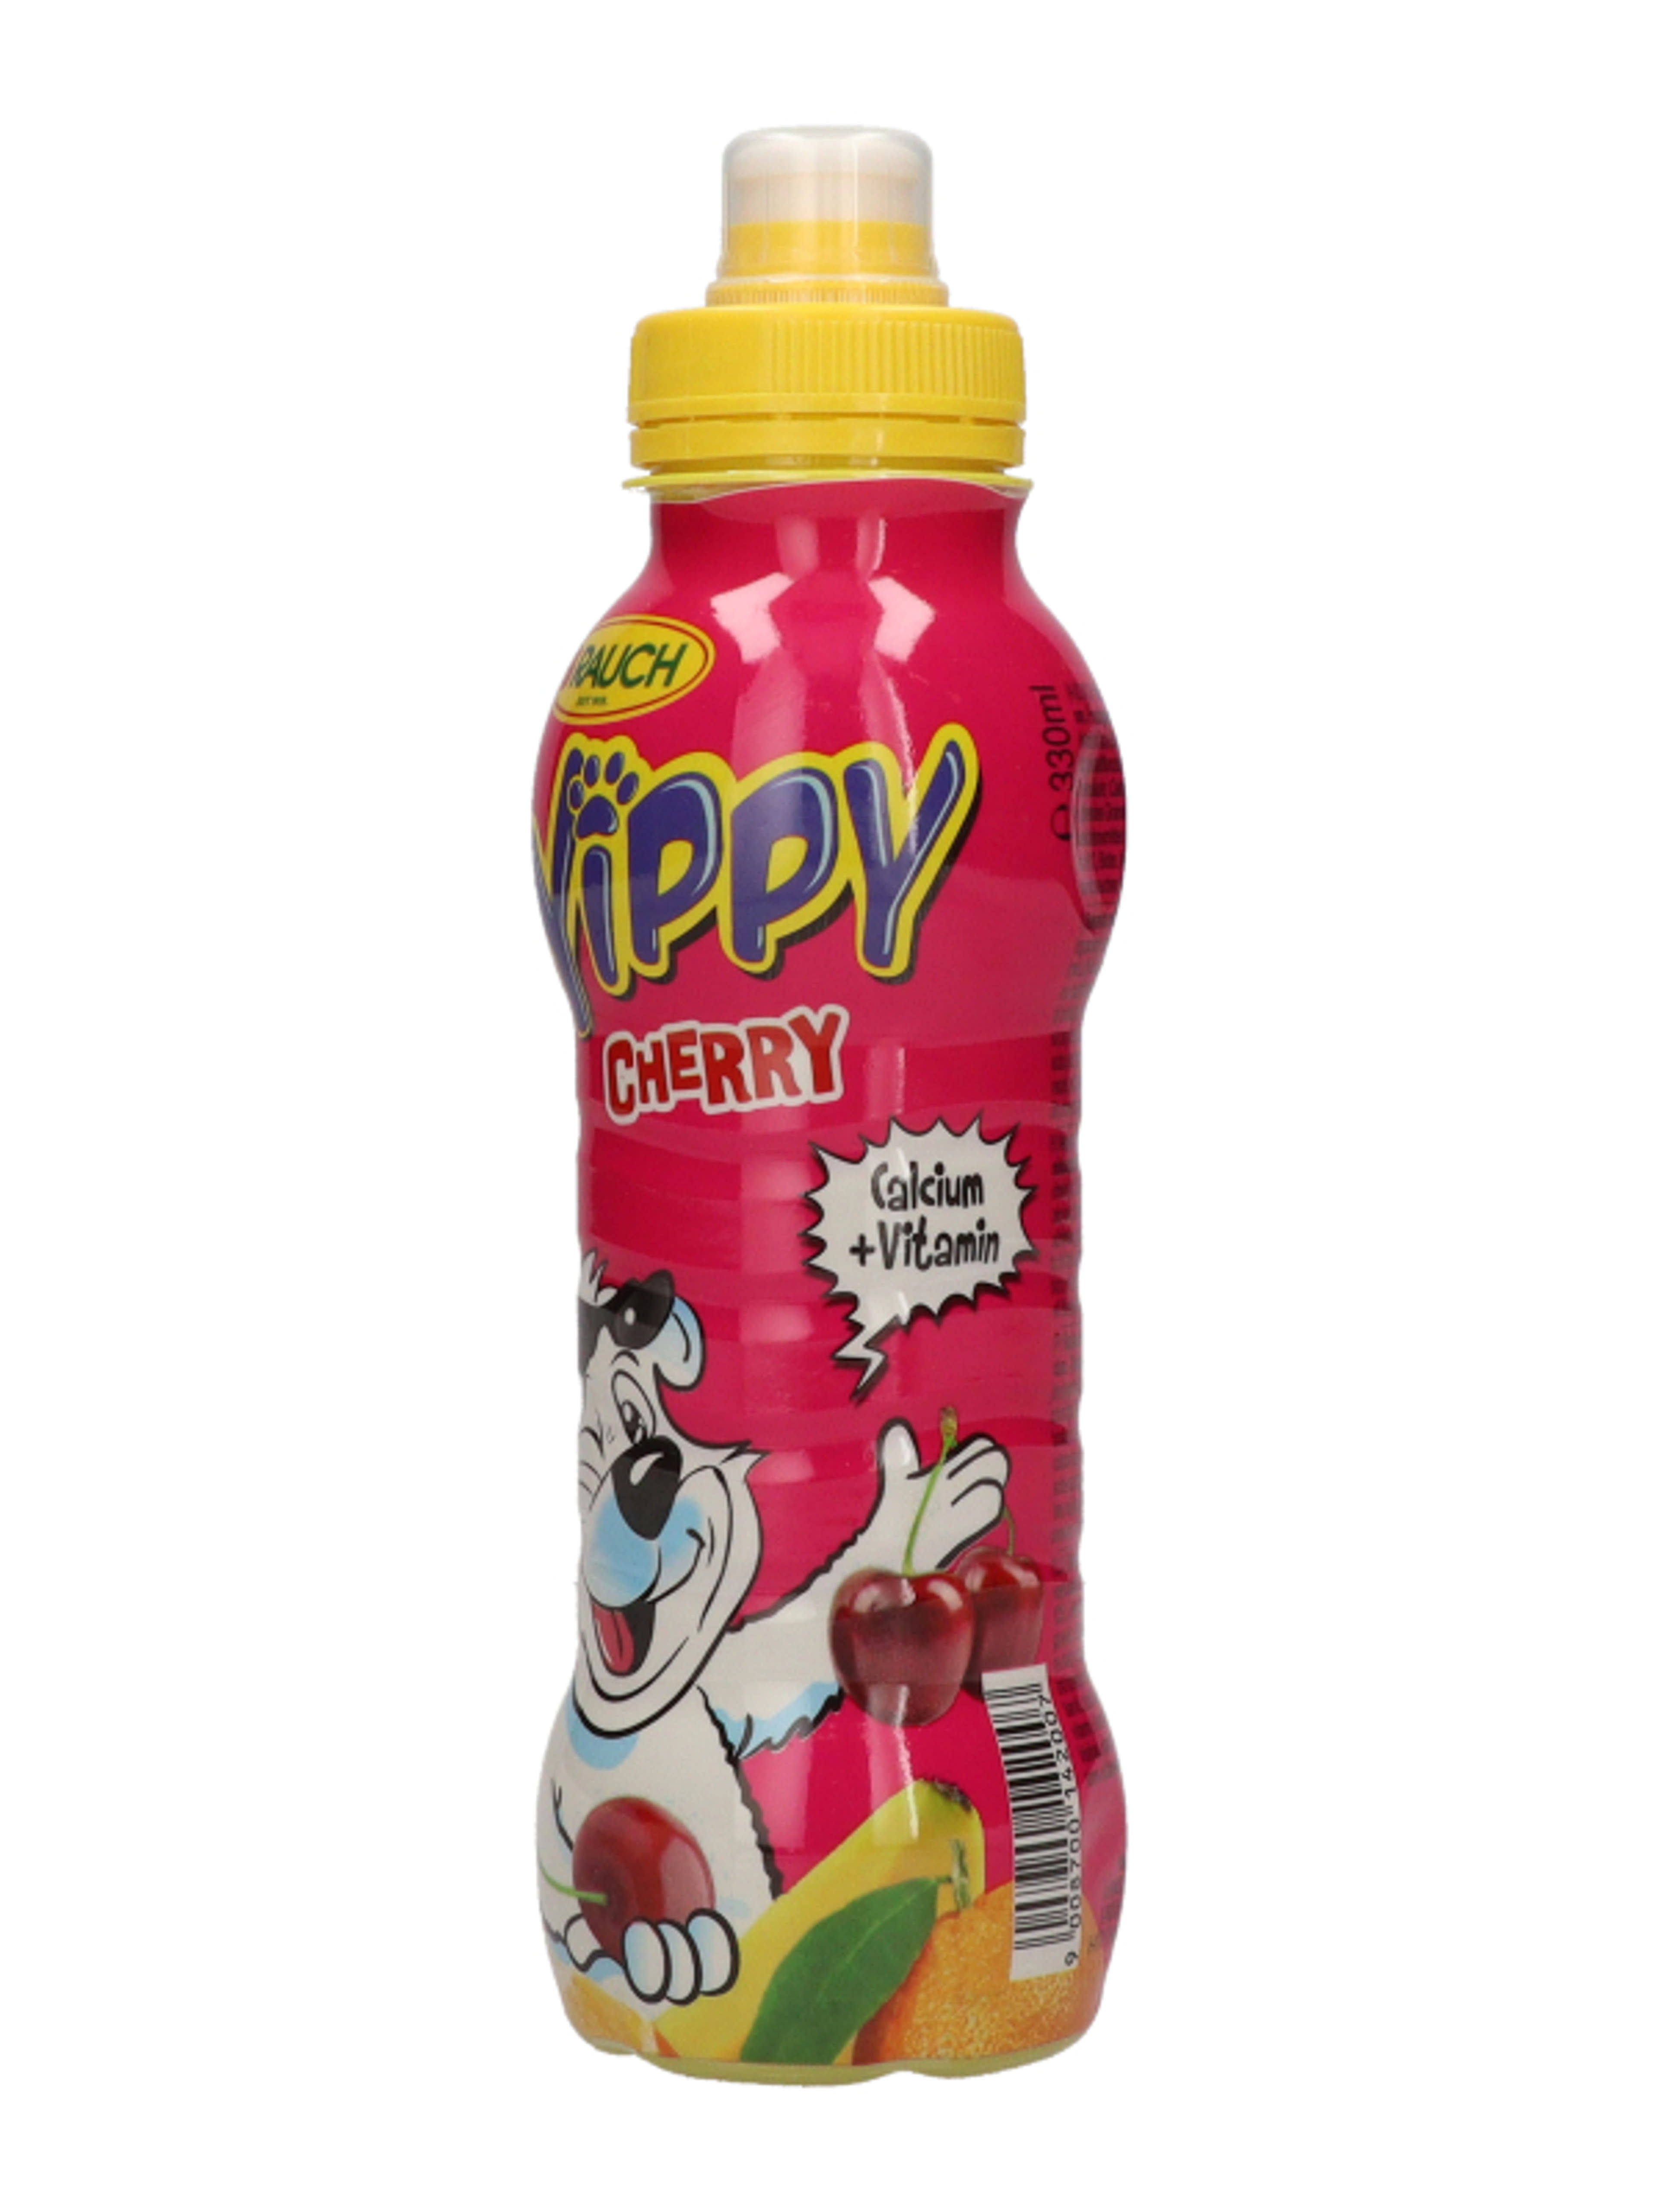 Yippy cherry pet - 330 ml-3